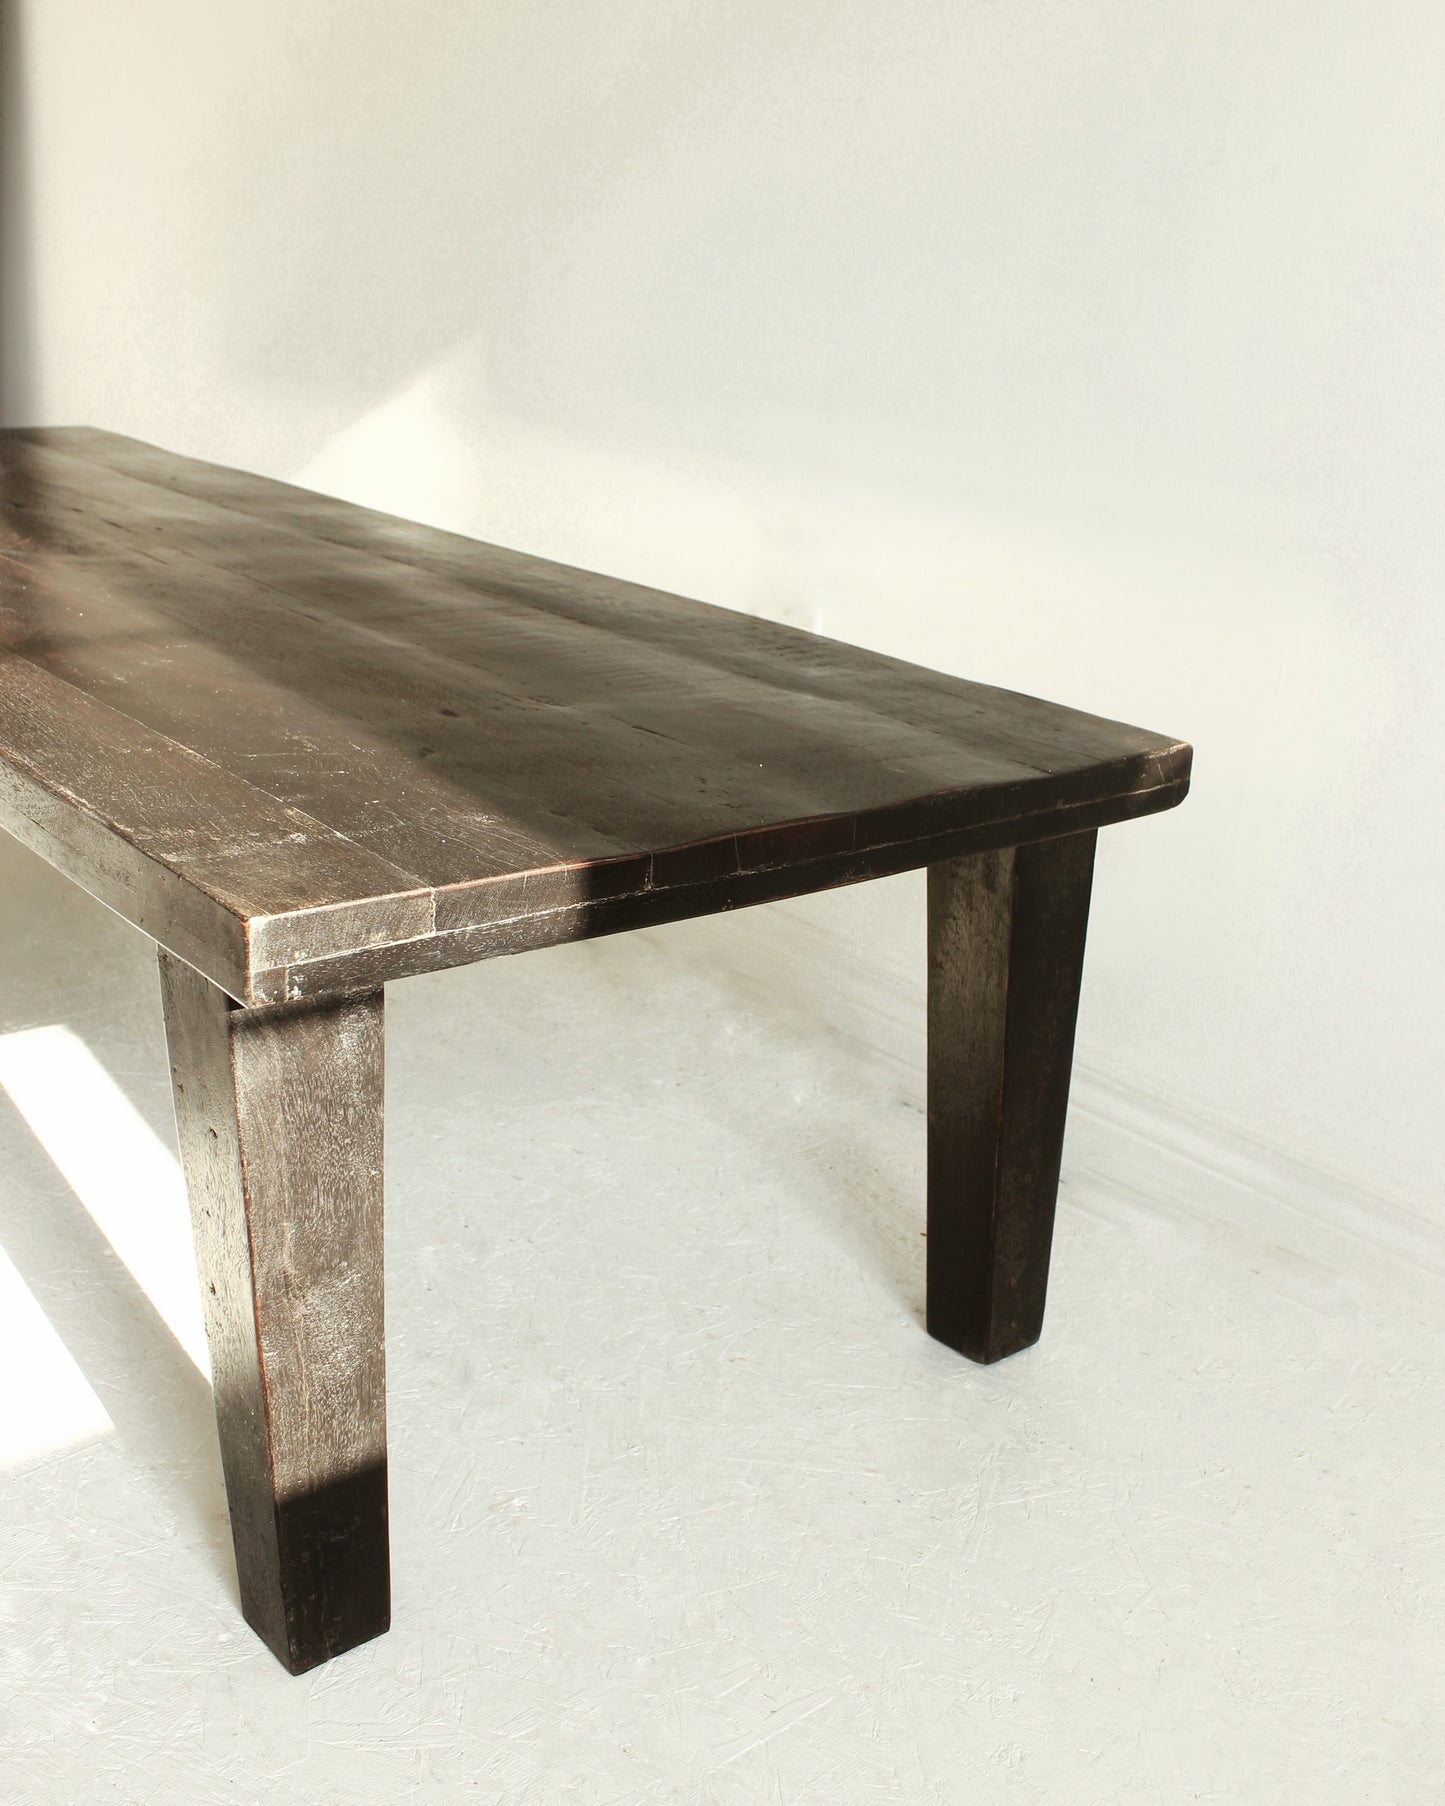 THE GERDU - Matt Black Reclaimed Wood Coffee Table